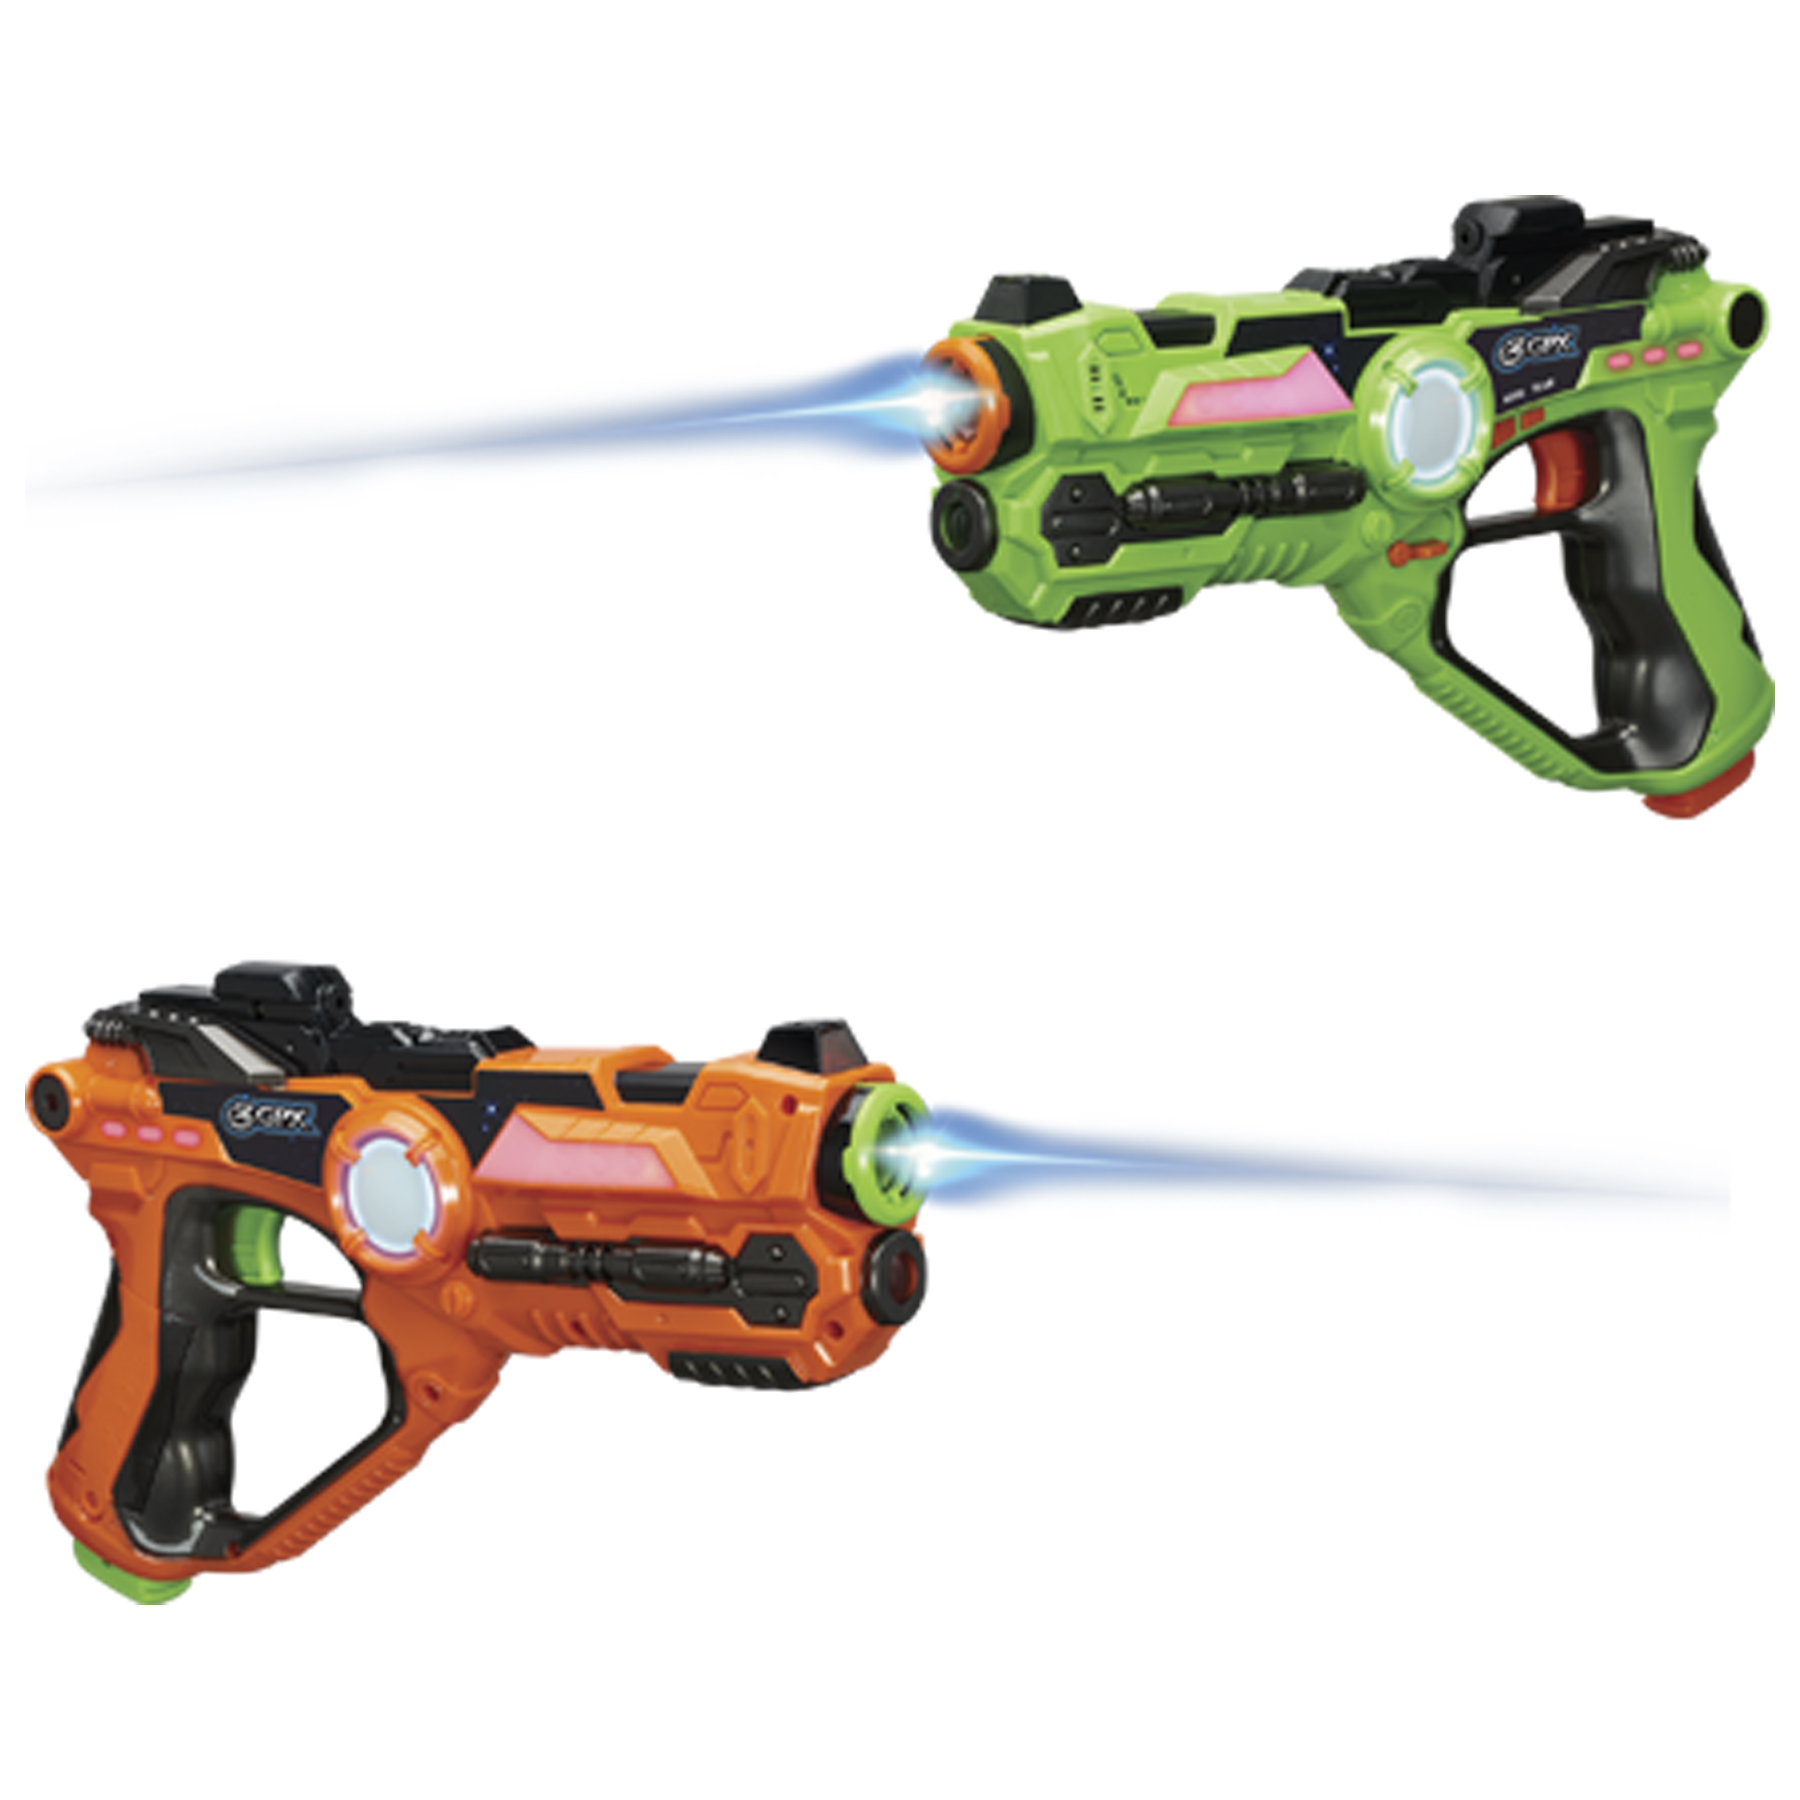 GPX Laser Tag Blasters, 2 Blaster Set - image 1 of 9